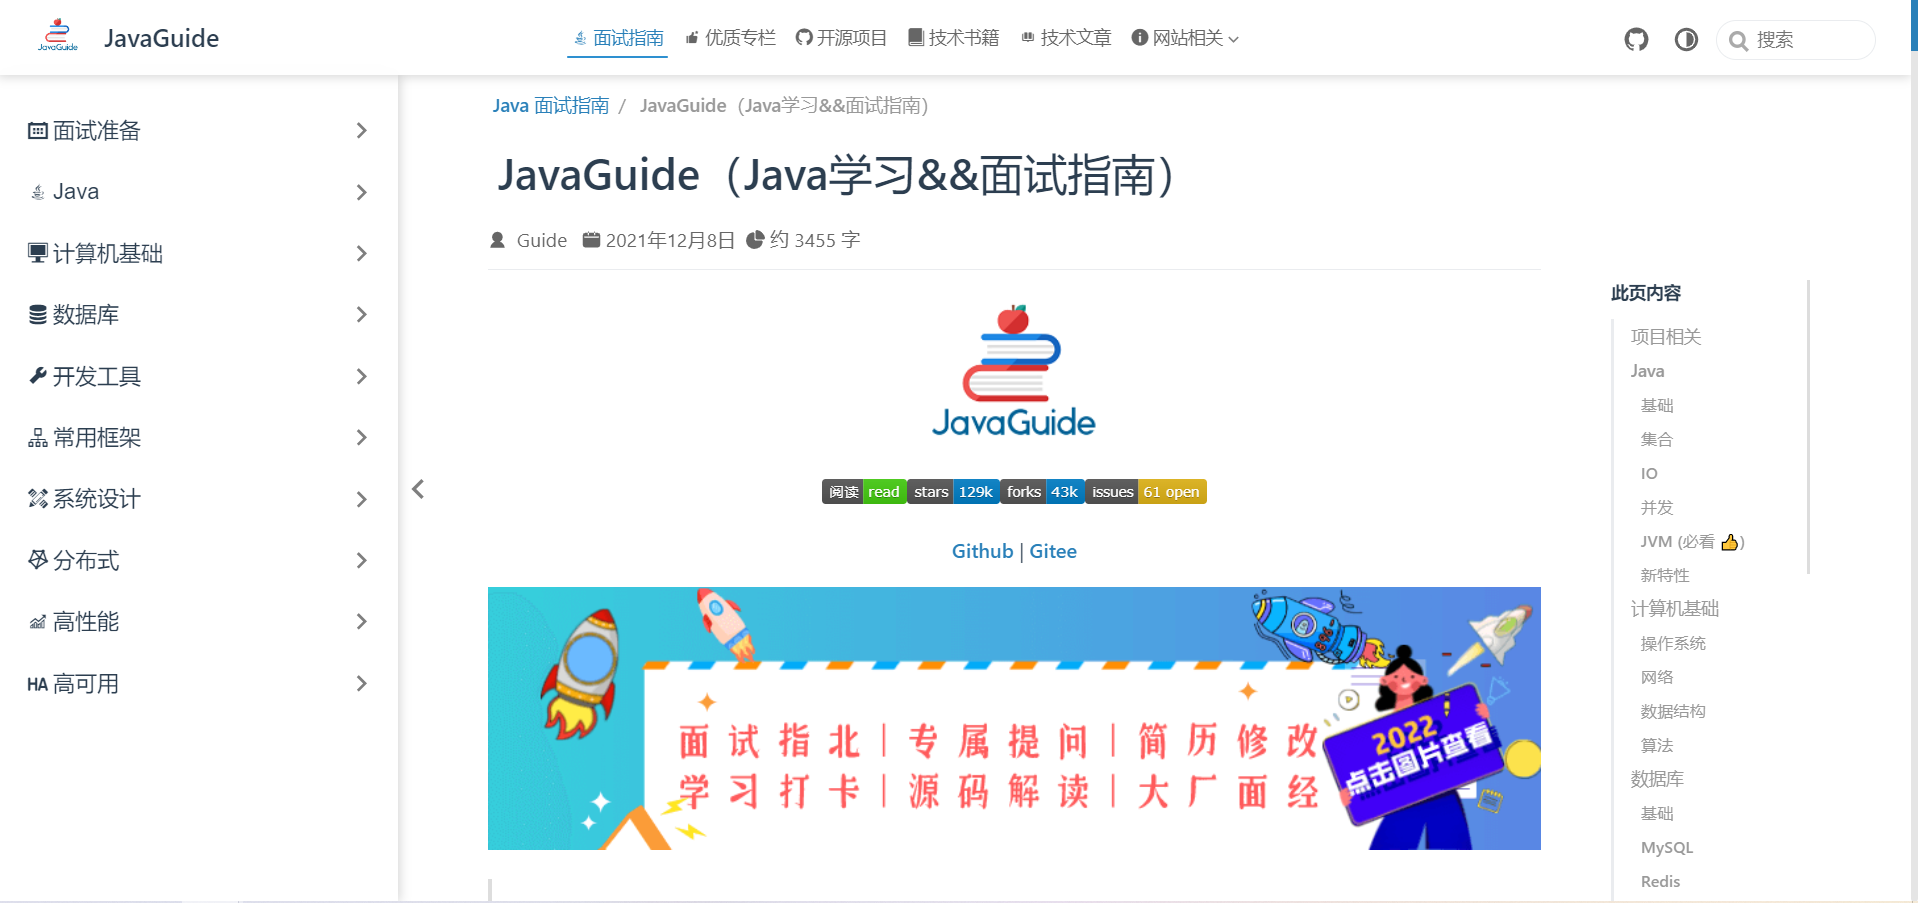 JavaGuide 内容目录